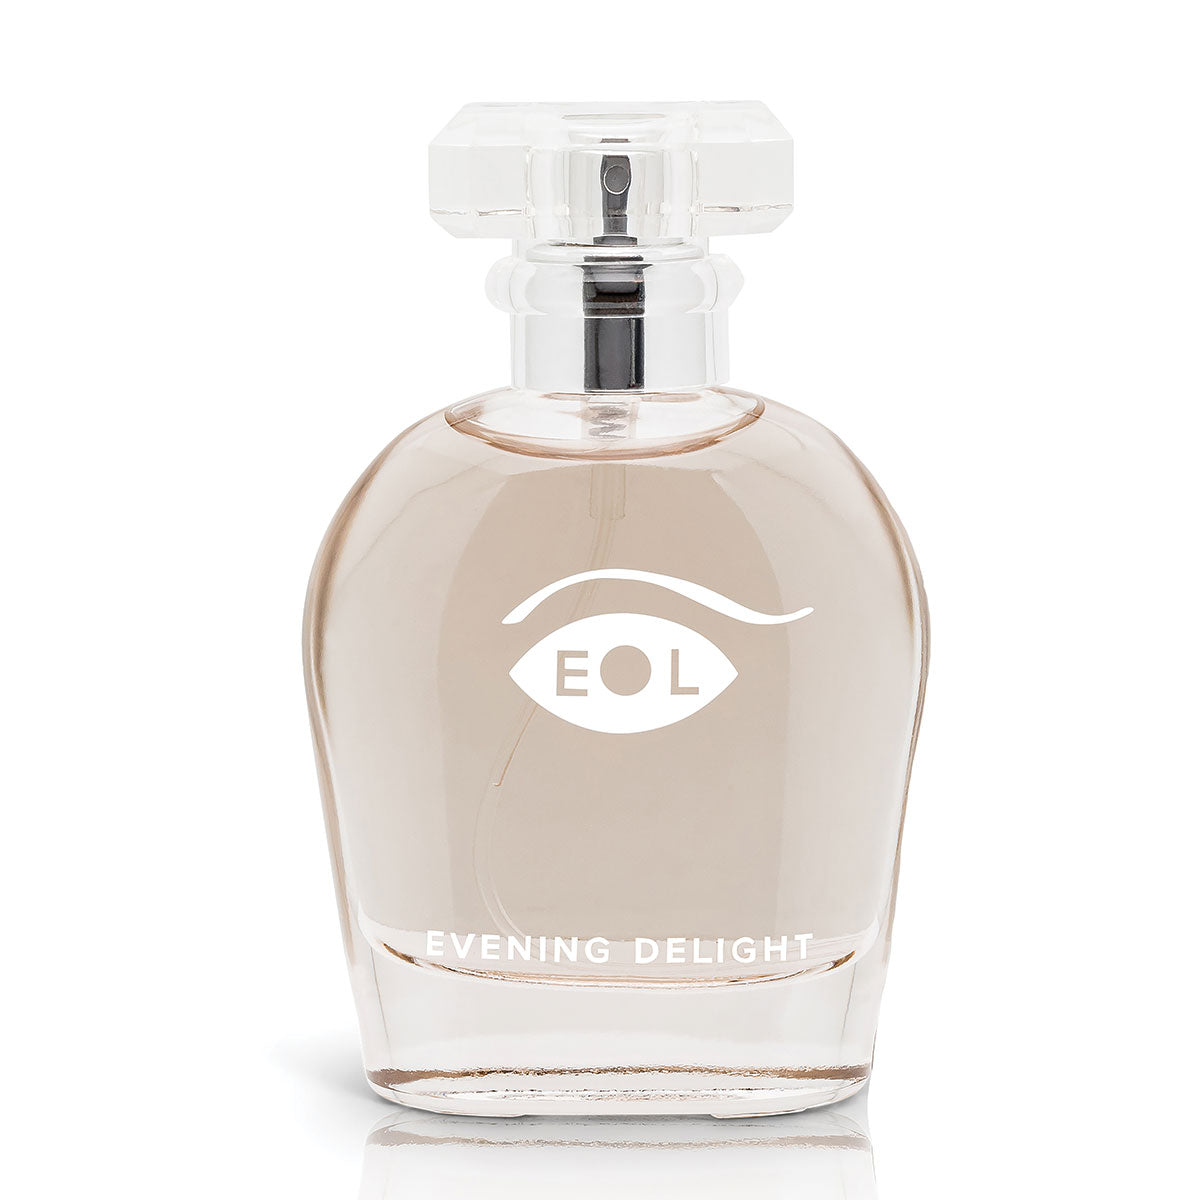 Eye of Love Pheromone Parfum 50ml - Evening Delight (F to M)